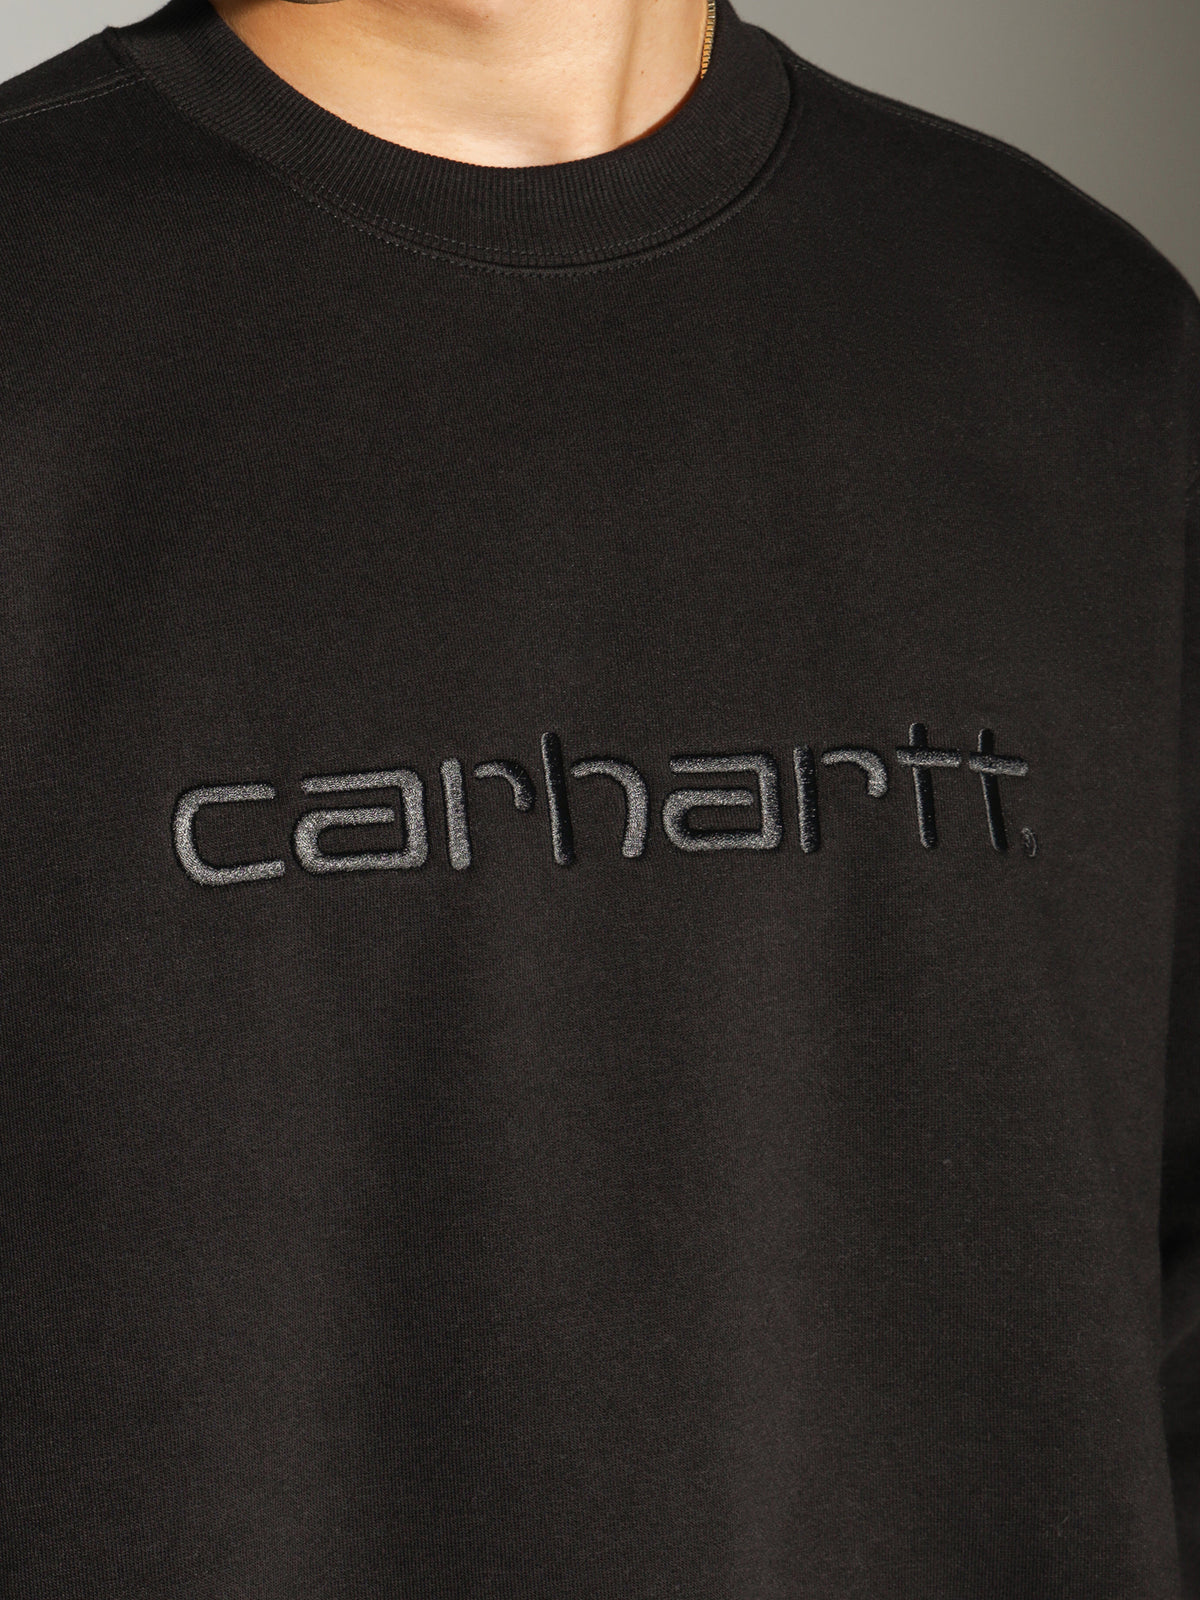 Carhartt Sweatshirt in Black